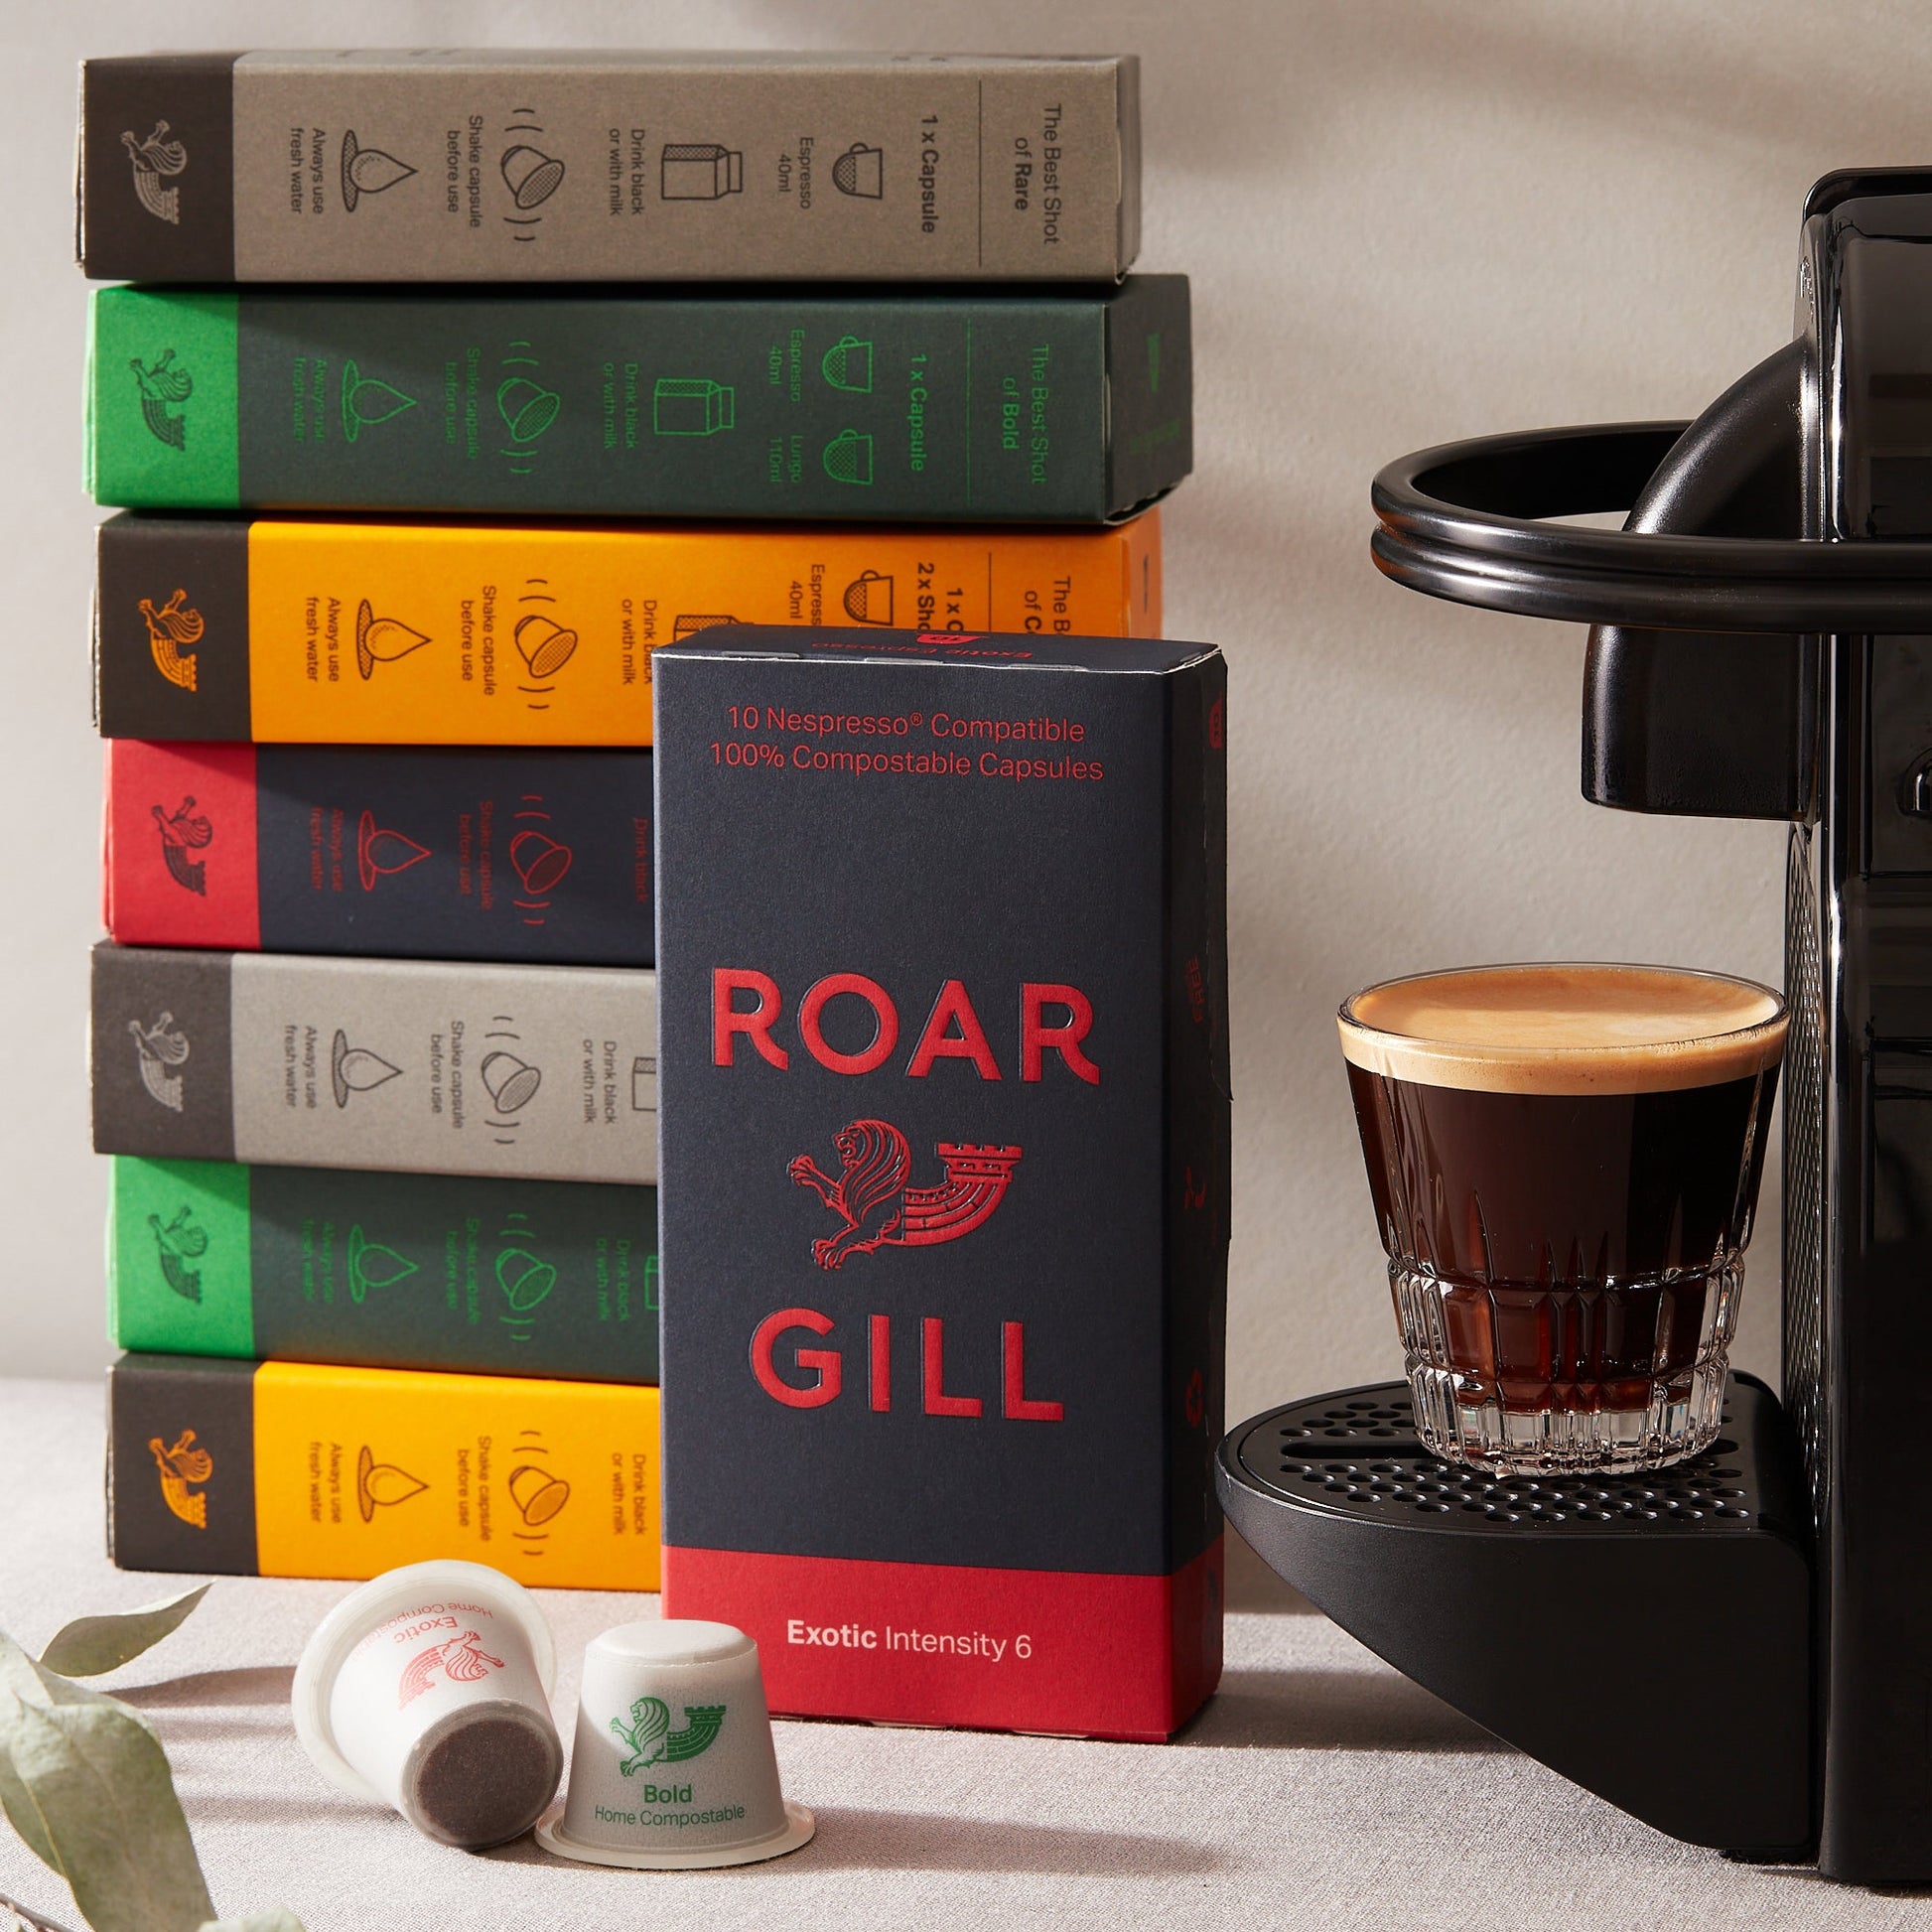 Roar Gill espresso perched on nespresso machine., next to compostable pod boxes.